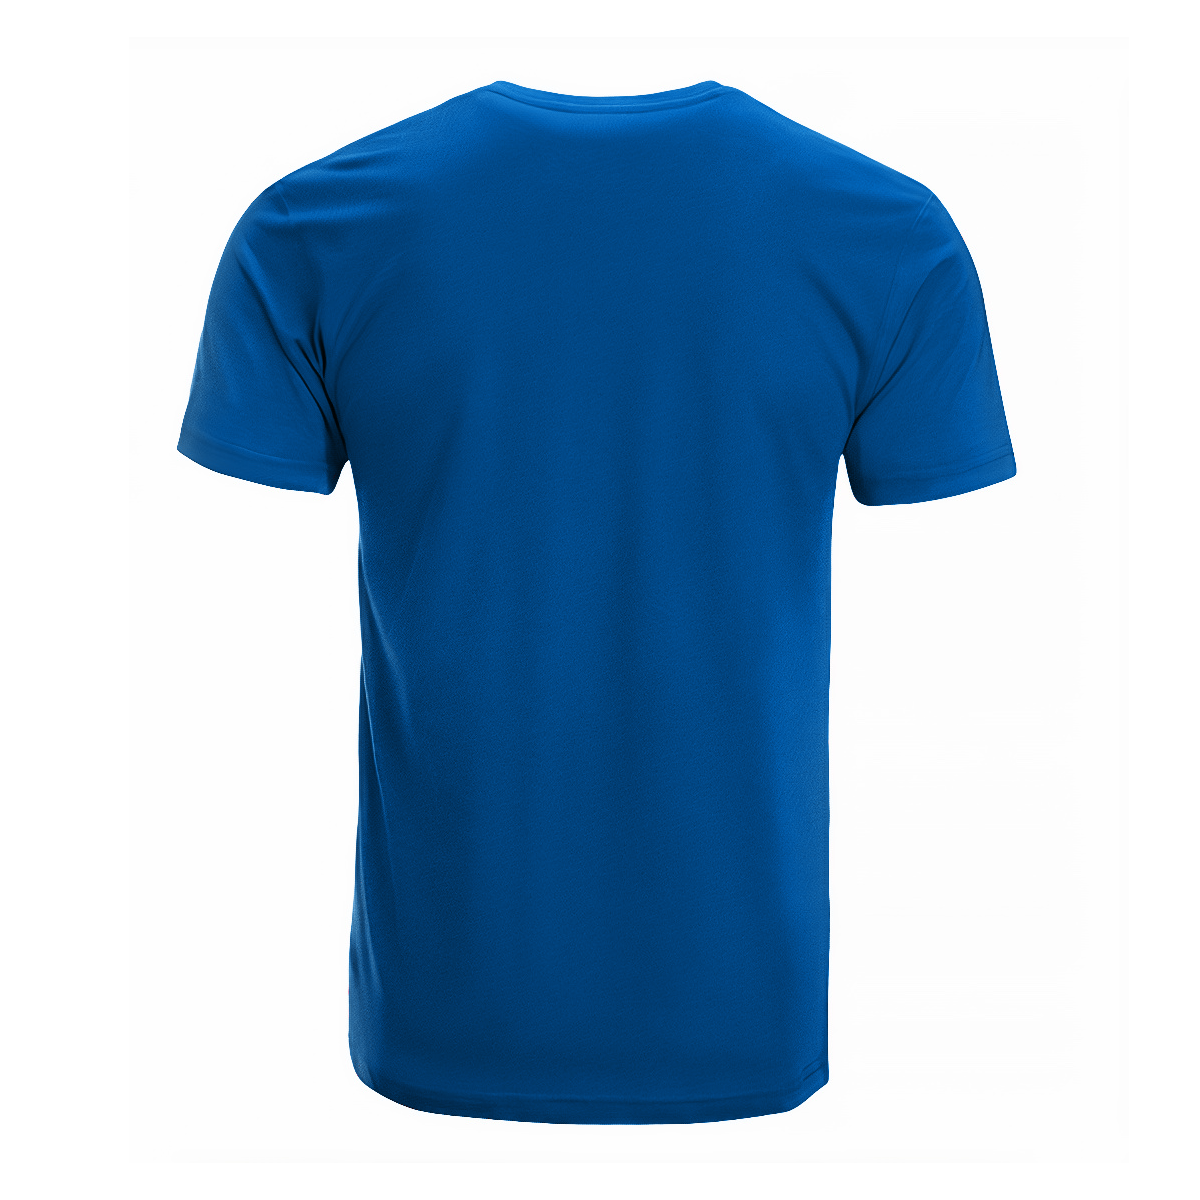 Congilton Tartan Crest T-shirt - I'm not yelling style